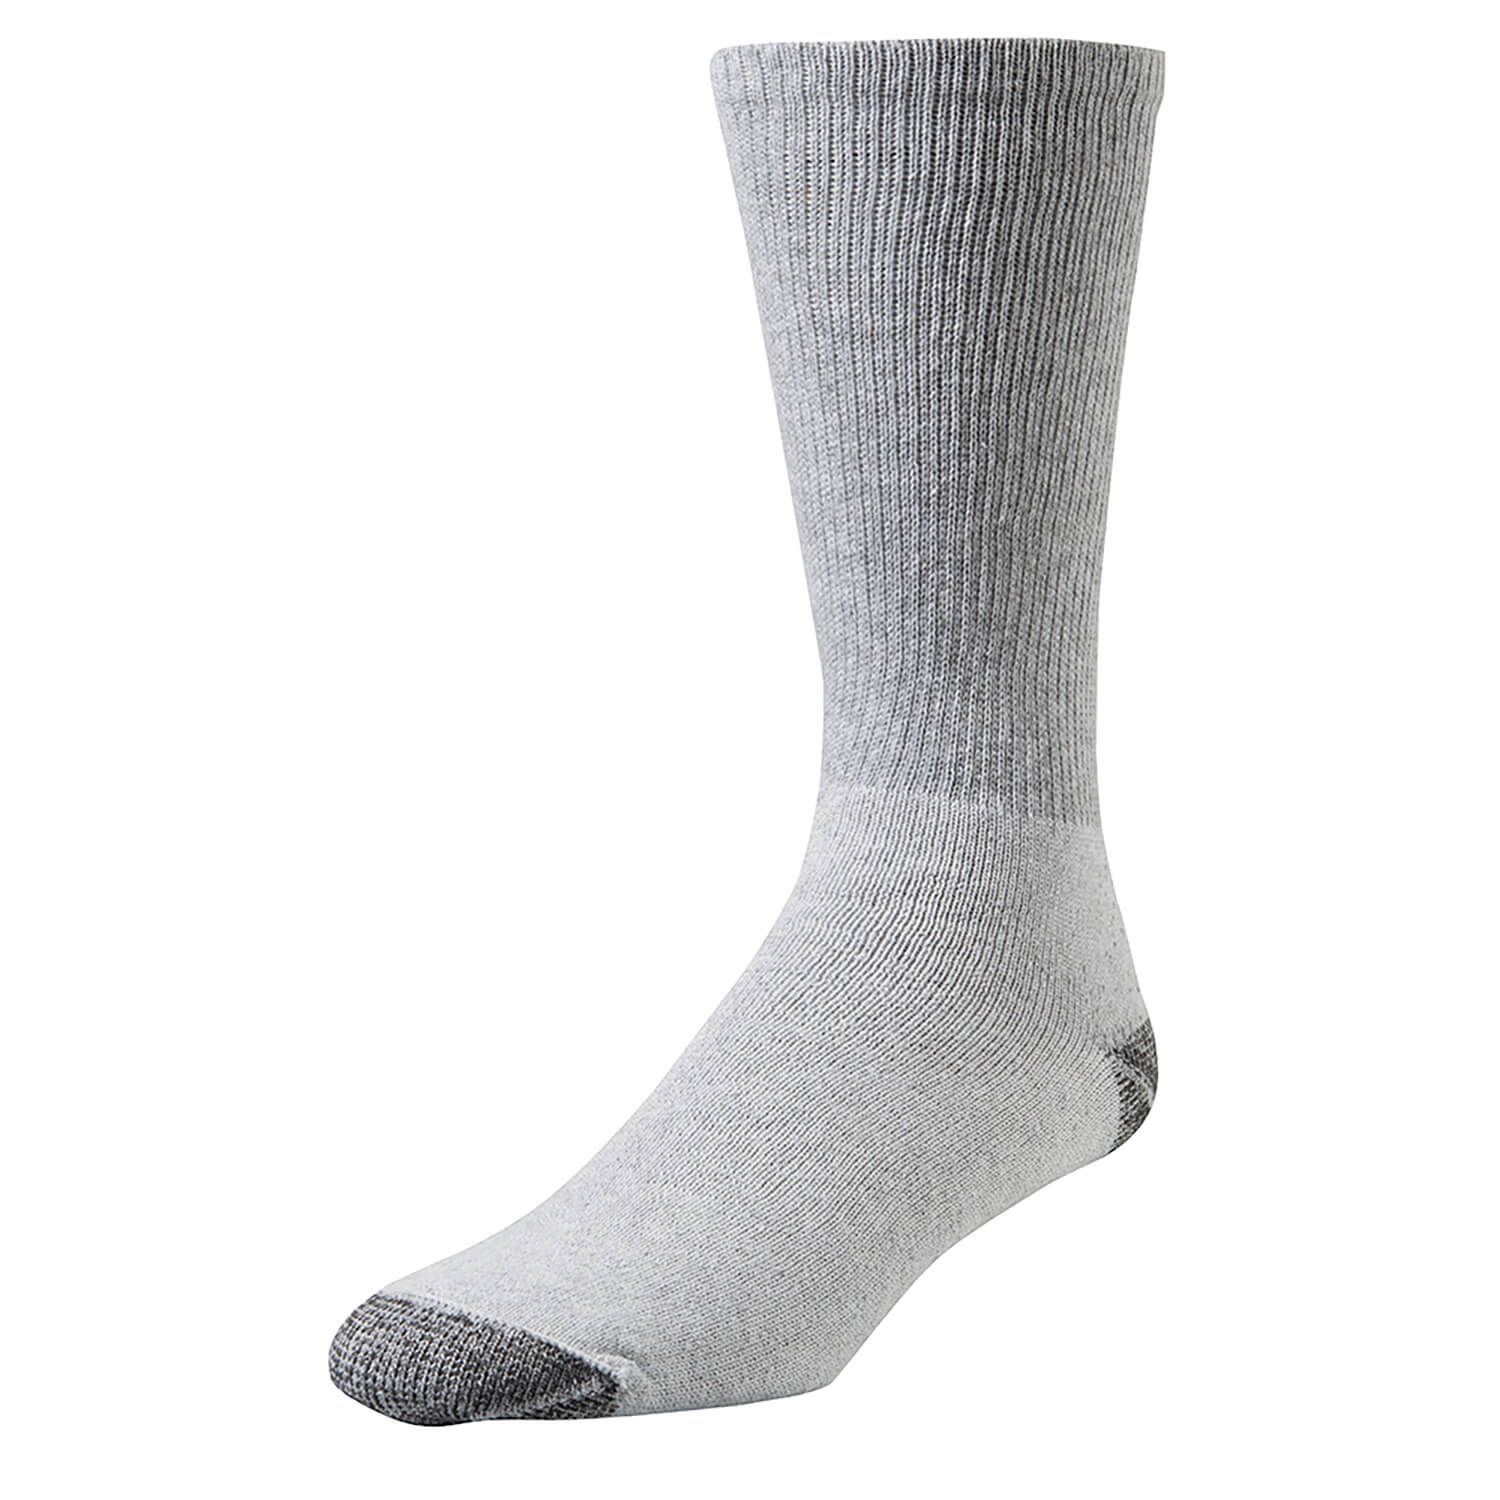 Wells Lamont | Gray Cotton Comfort Crew Socks, 6 Pair Pack